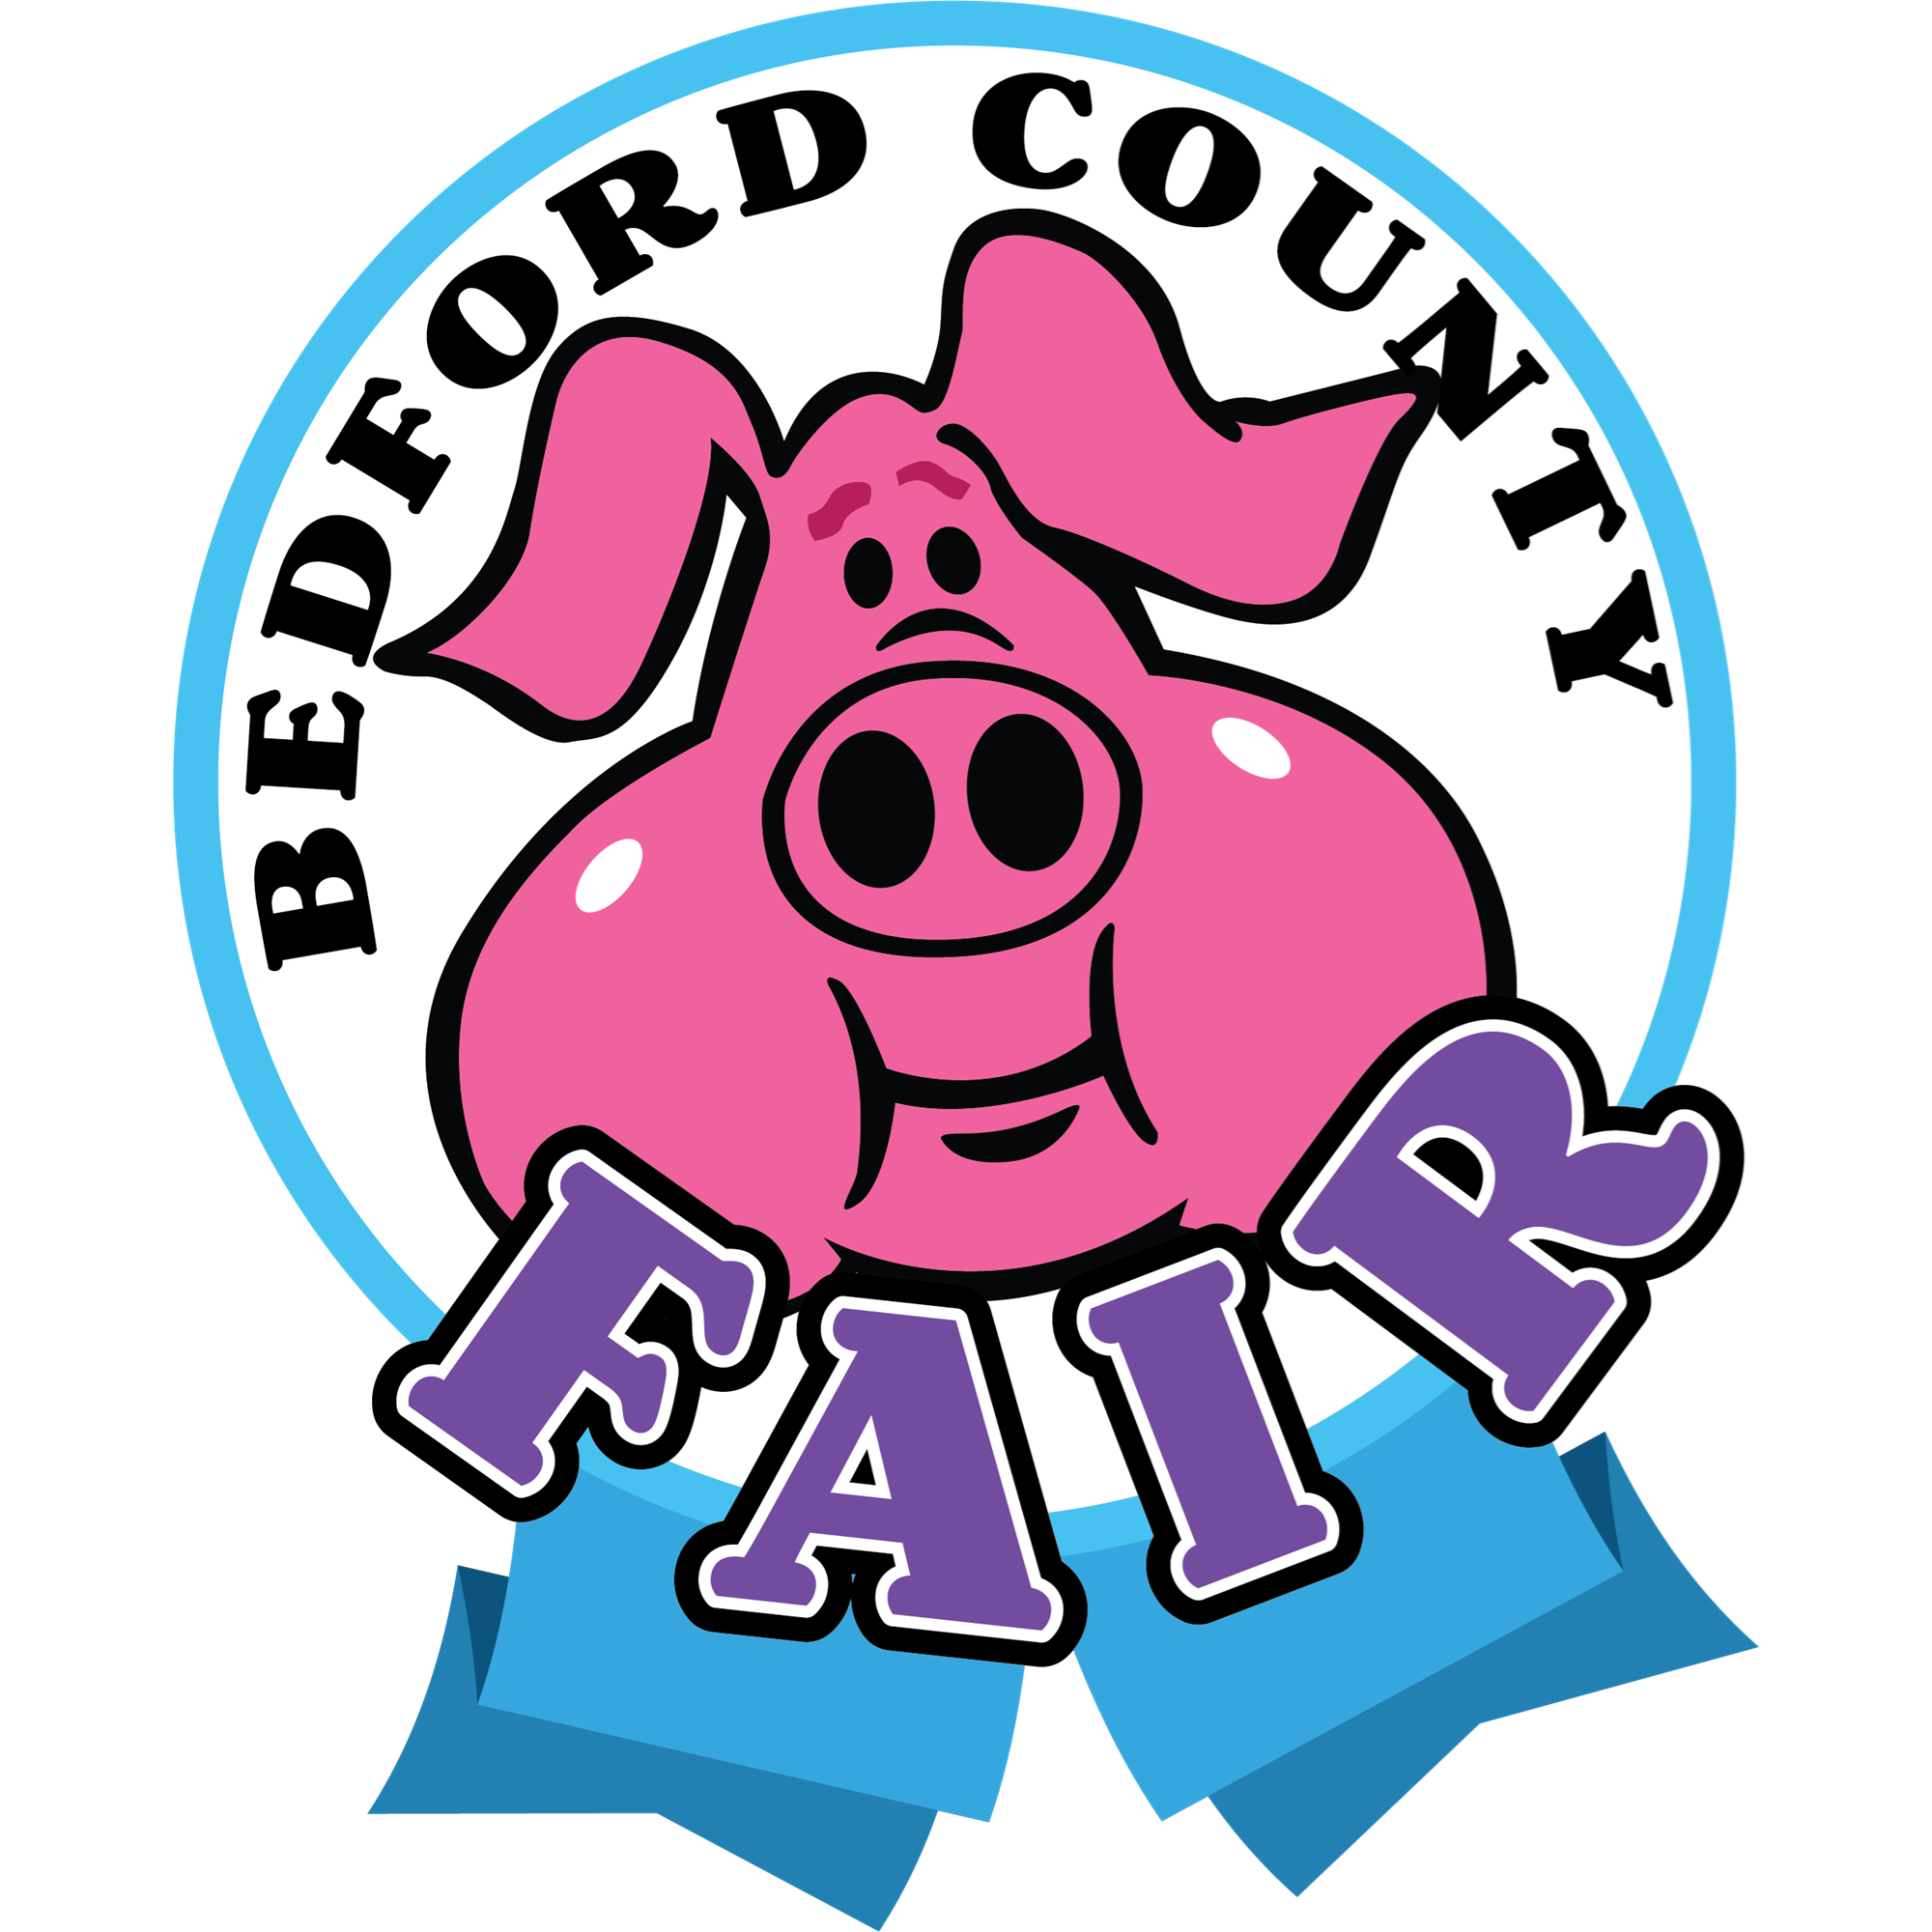 Bedford County Fair